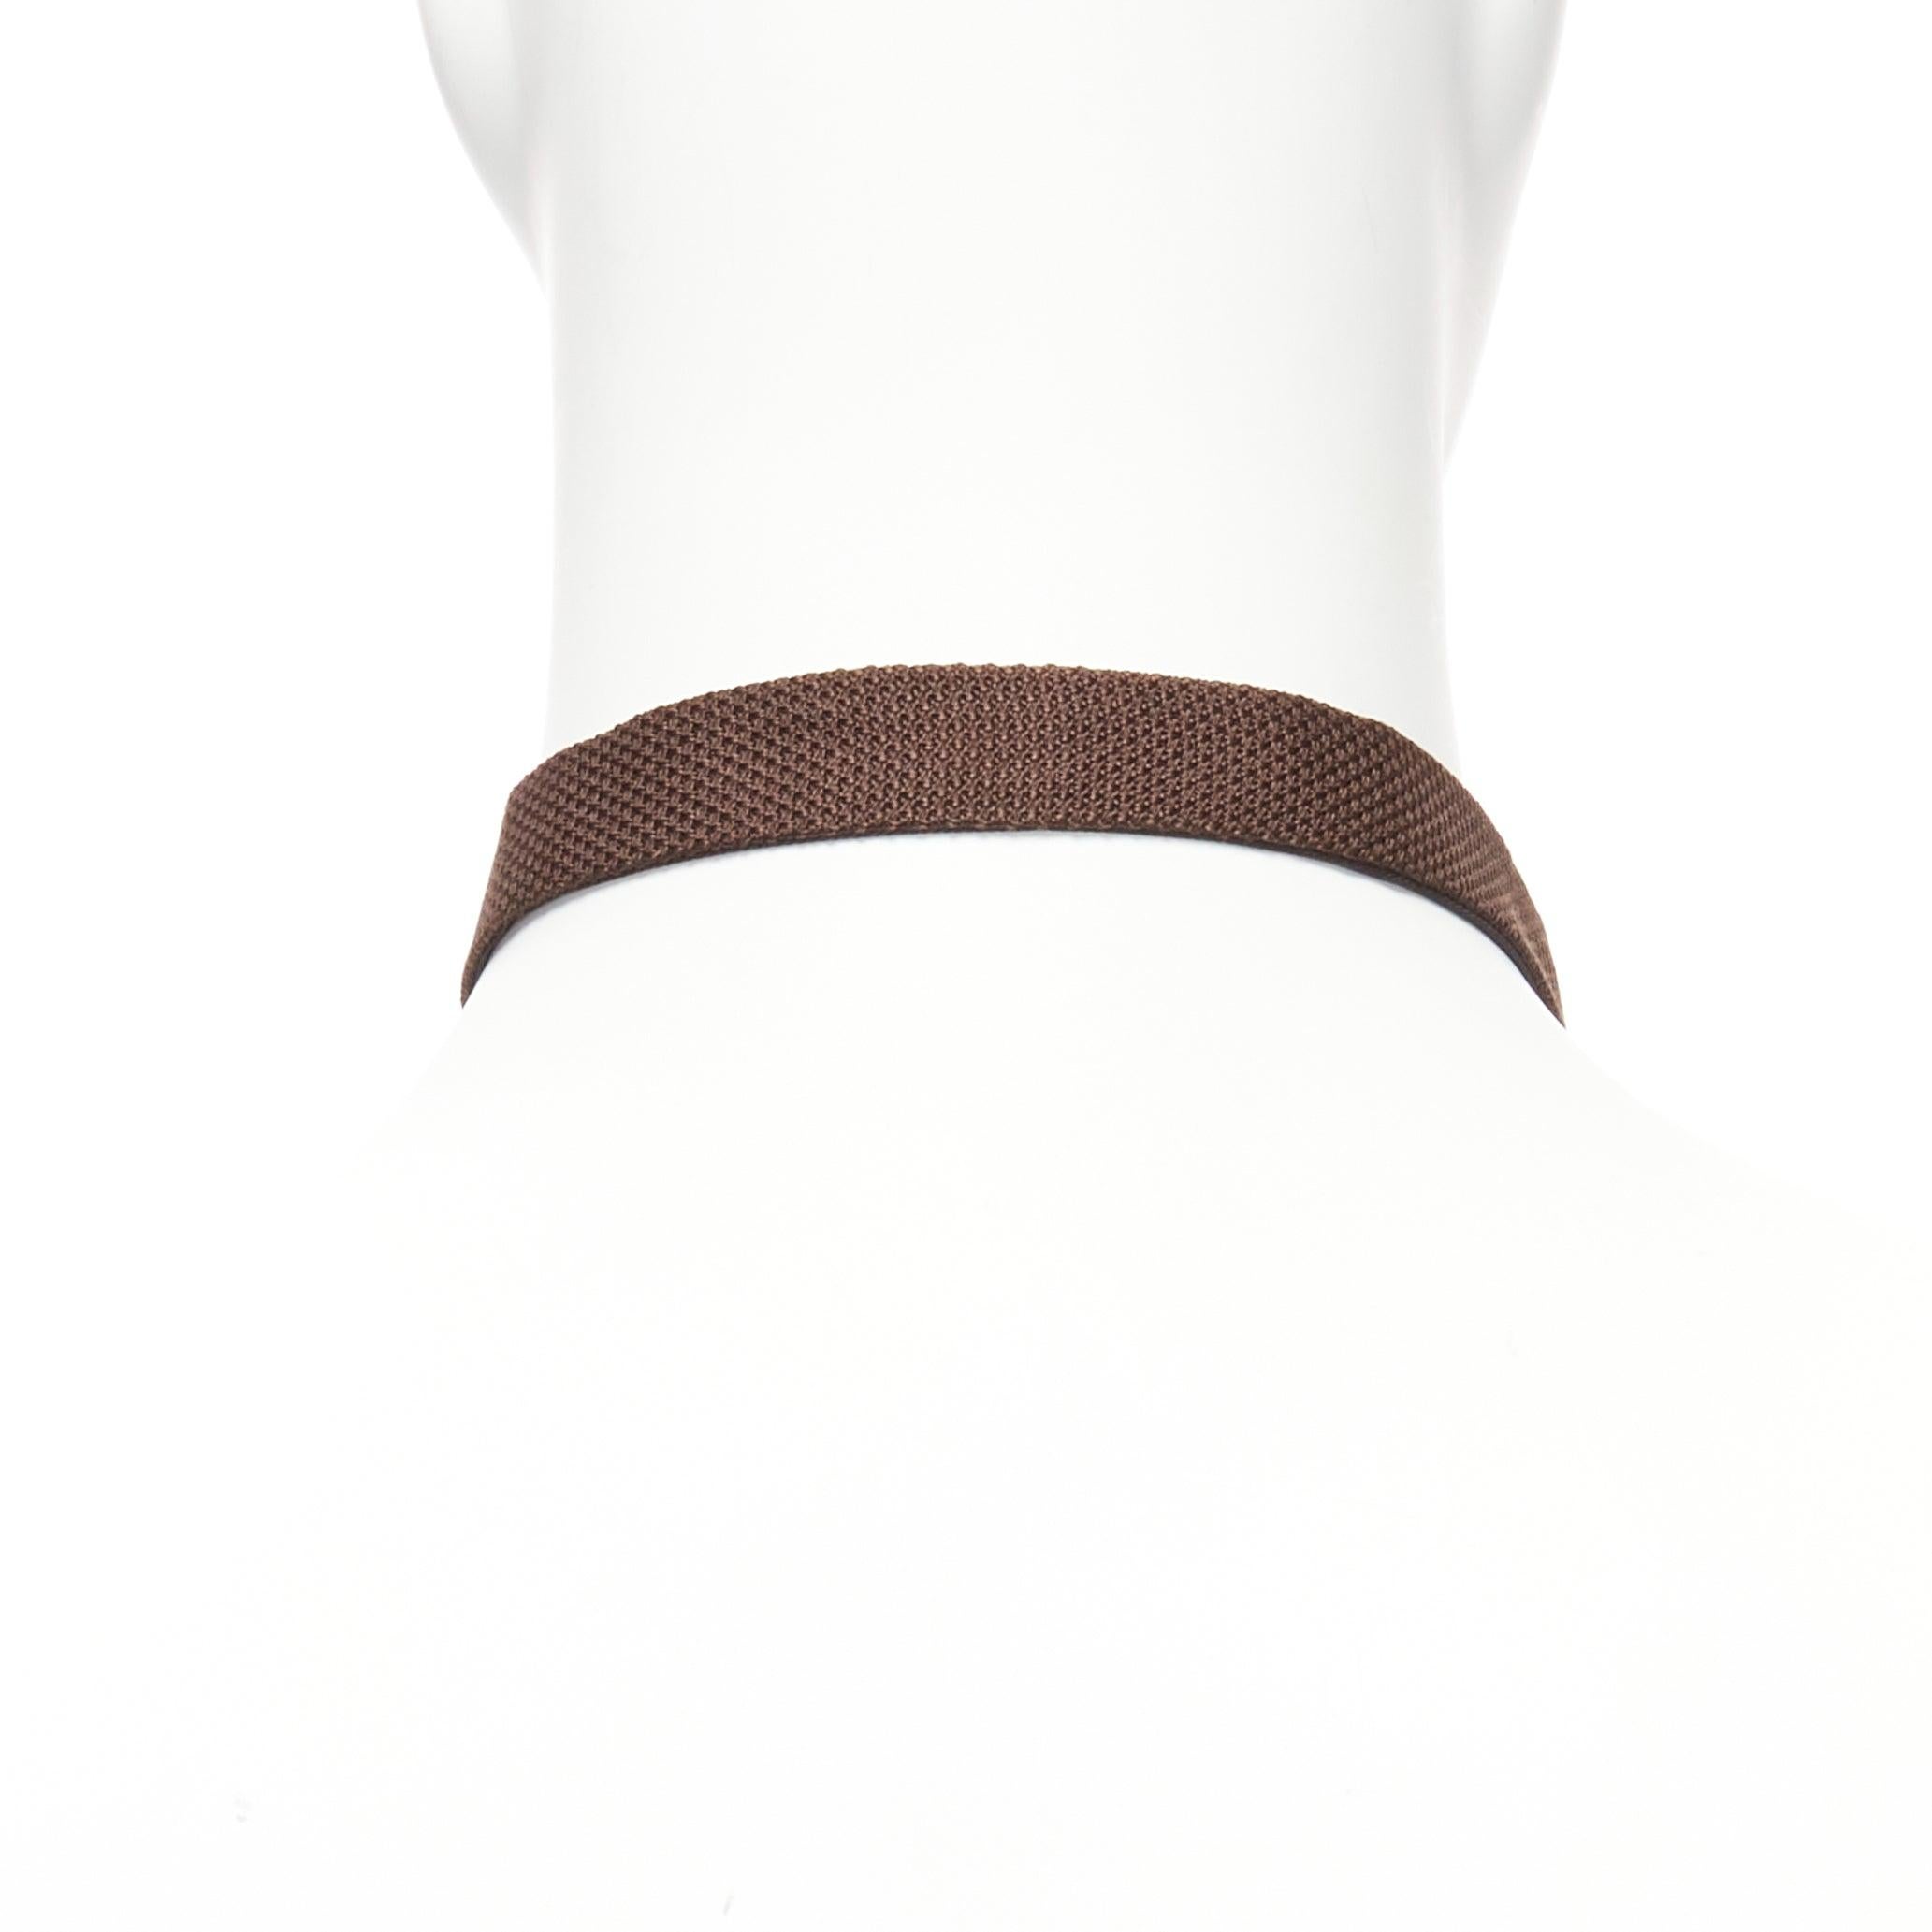 Men's new LANVIN Alber Elbaz brown textured fabric bow tie Adjustable For Sale